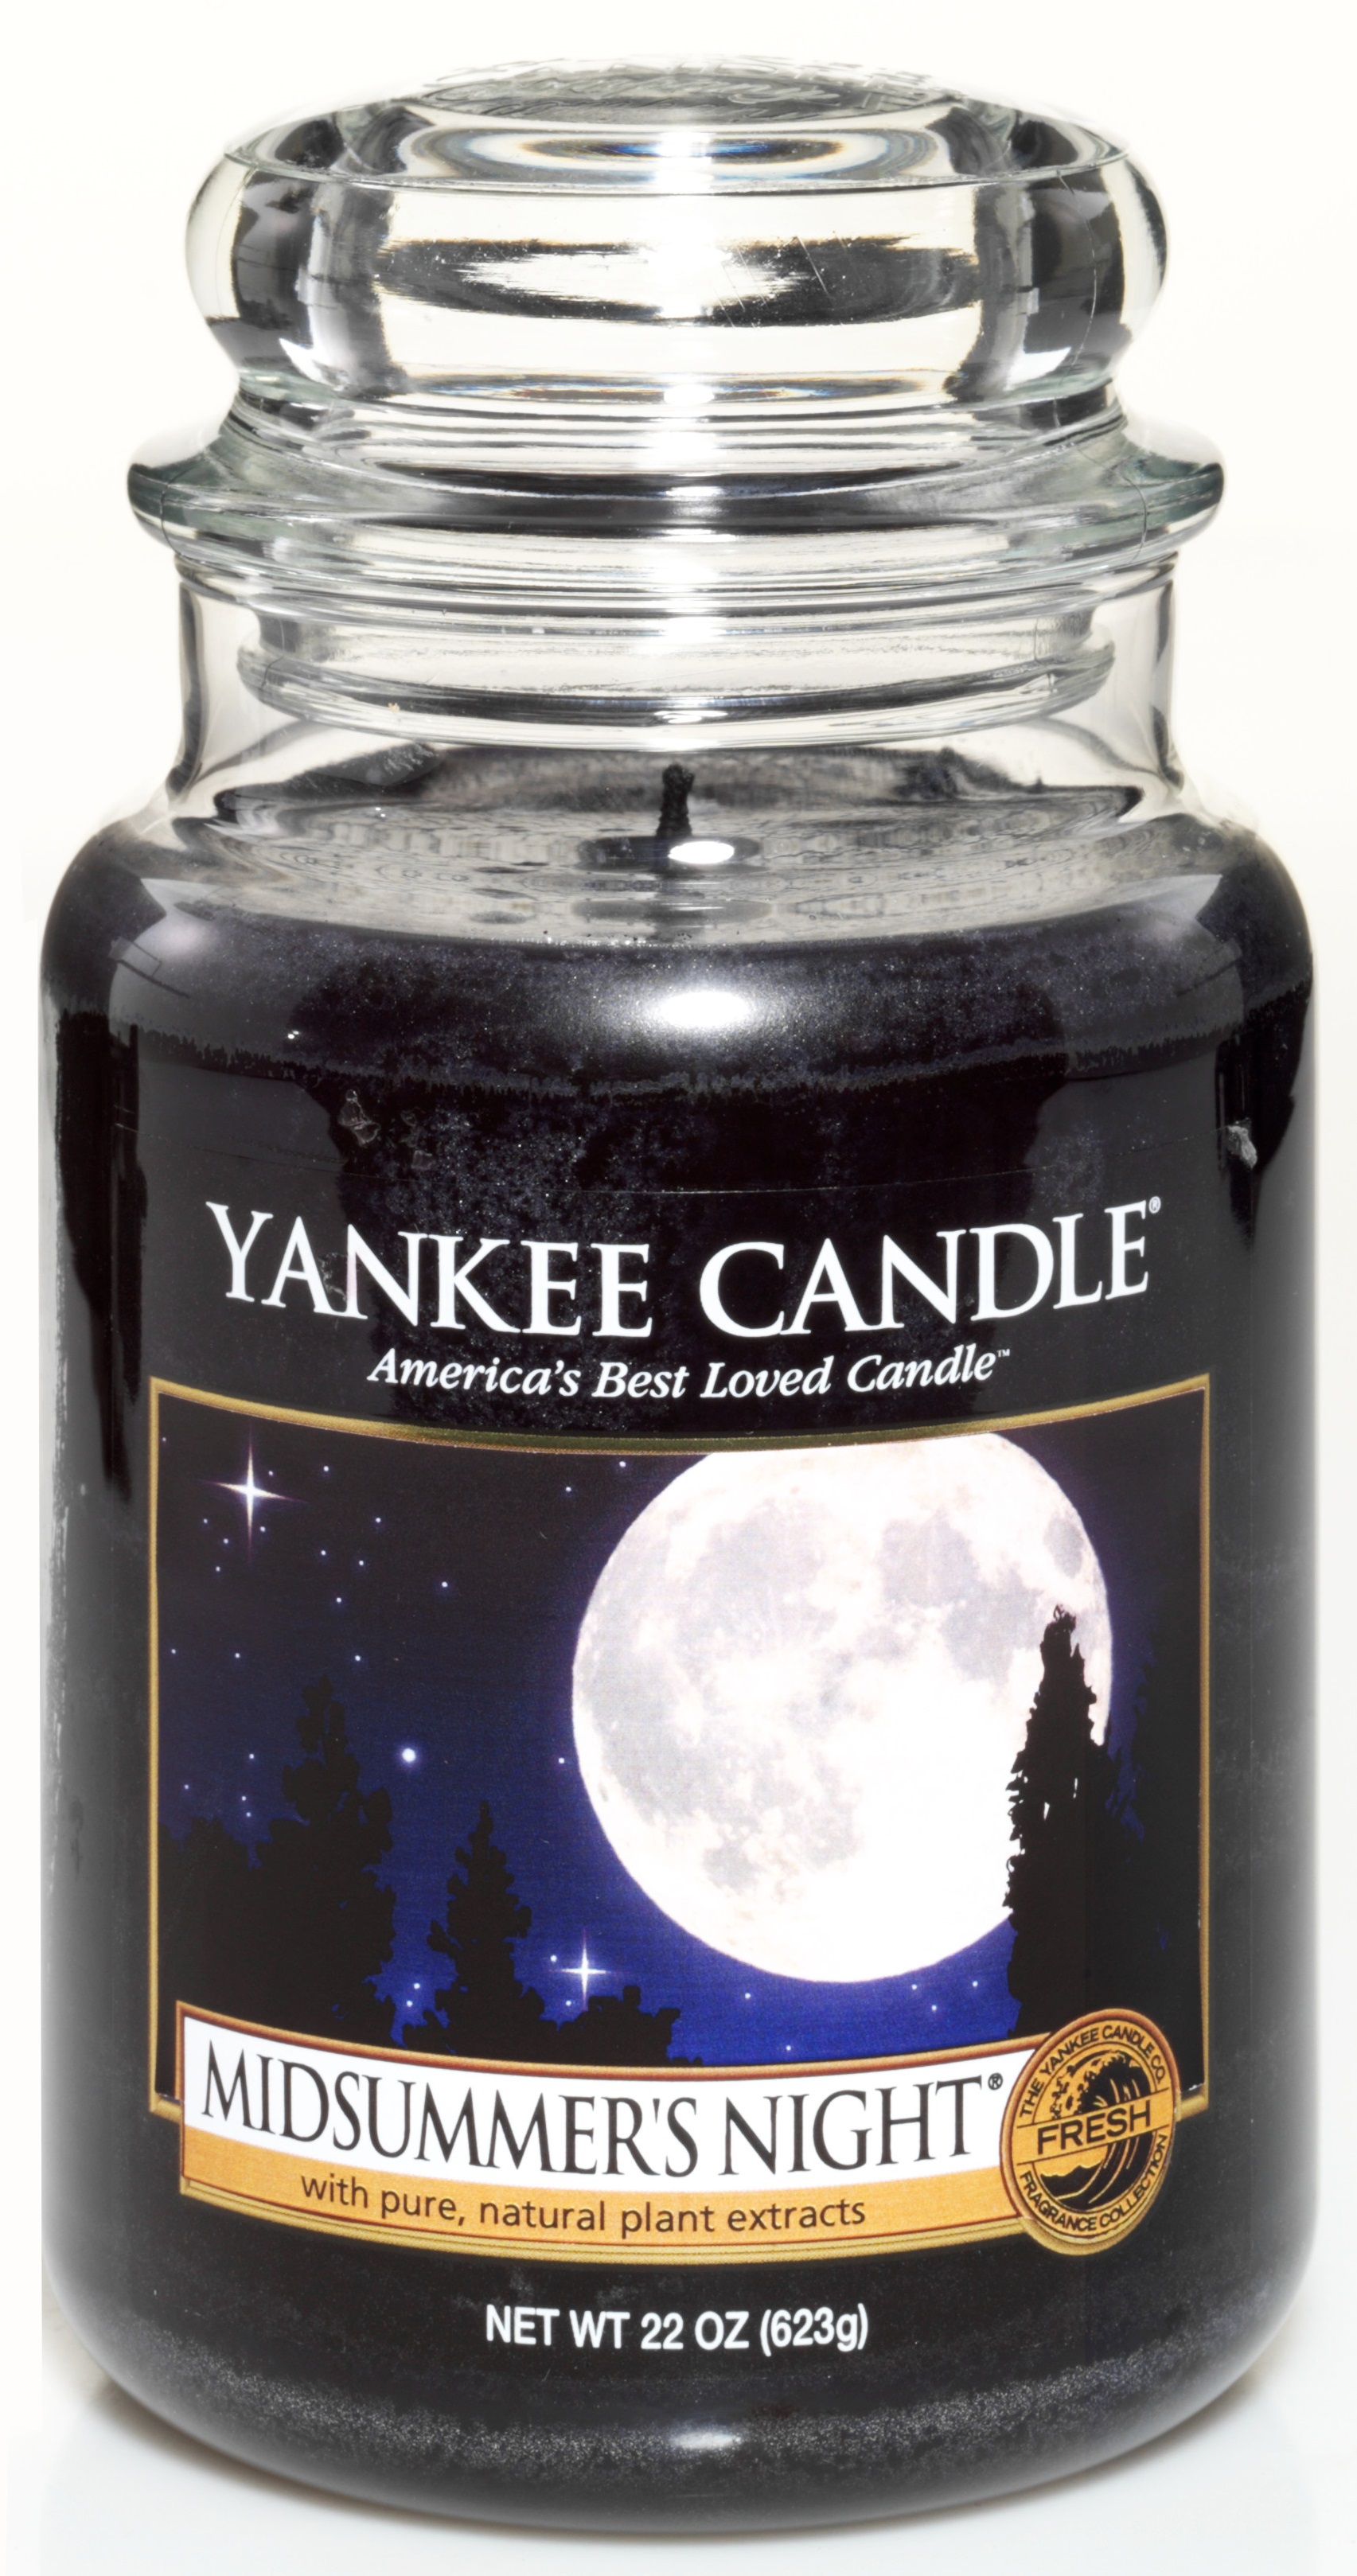 Yankee Candle Midsummer's Night Large Jar Large